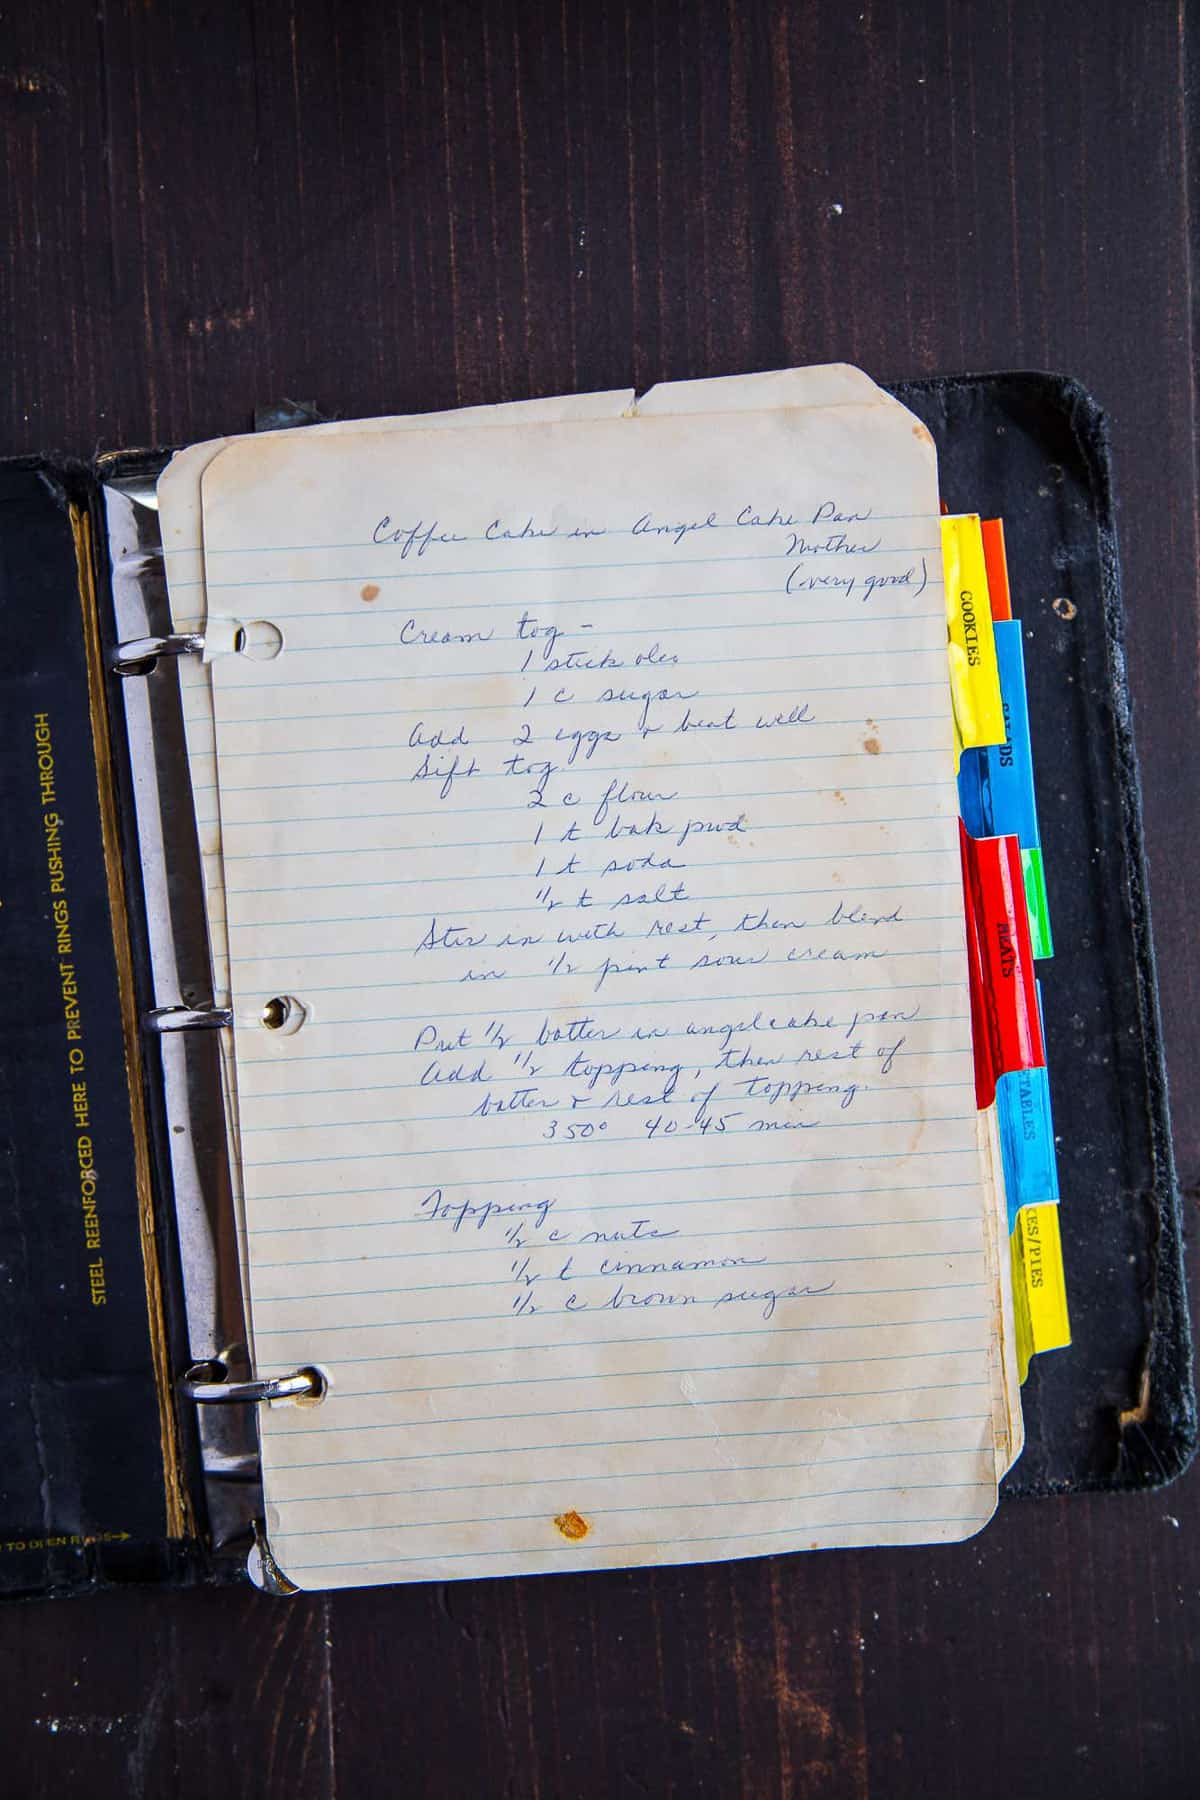 vintage recipe book with handwritten recipe.